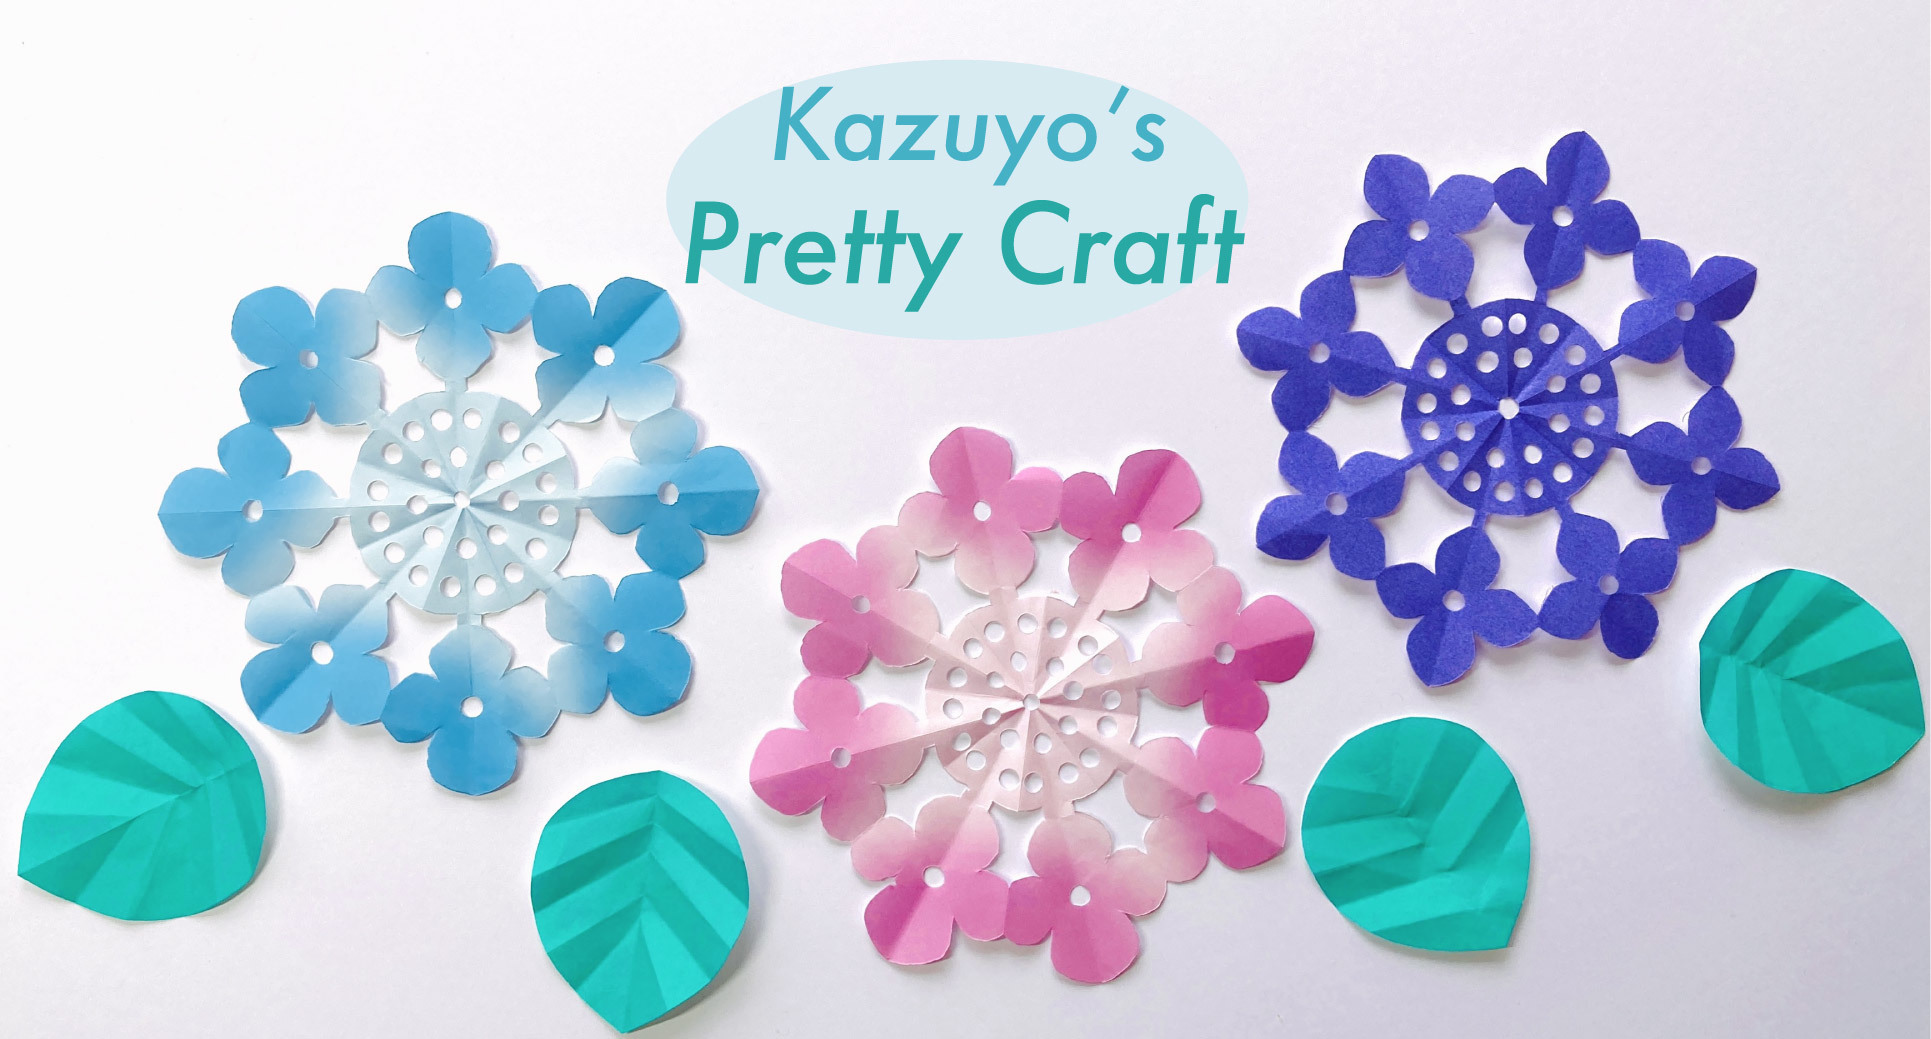 Kazuyo's Pretty Craft 